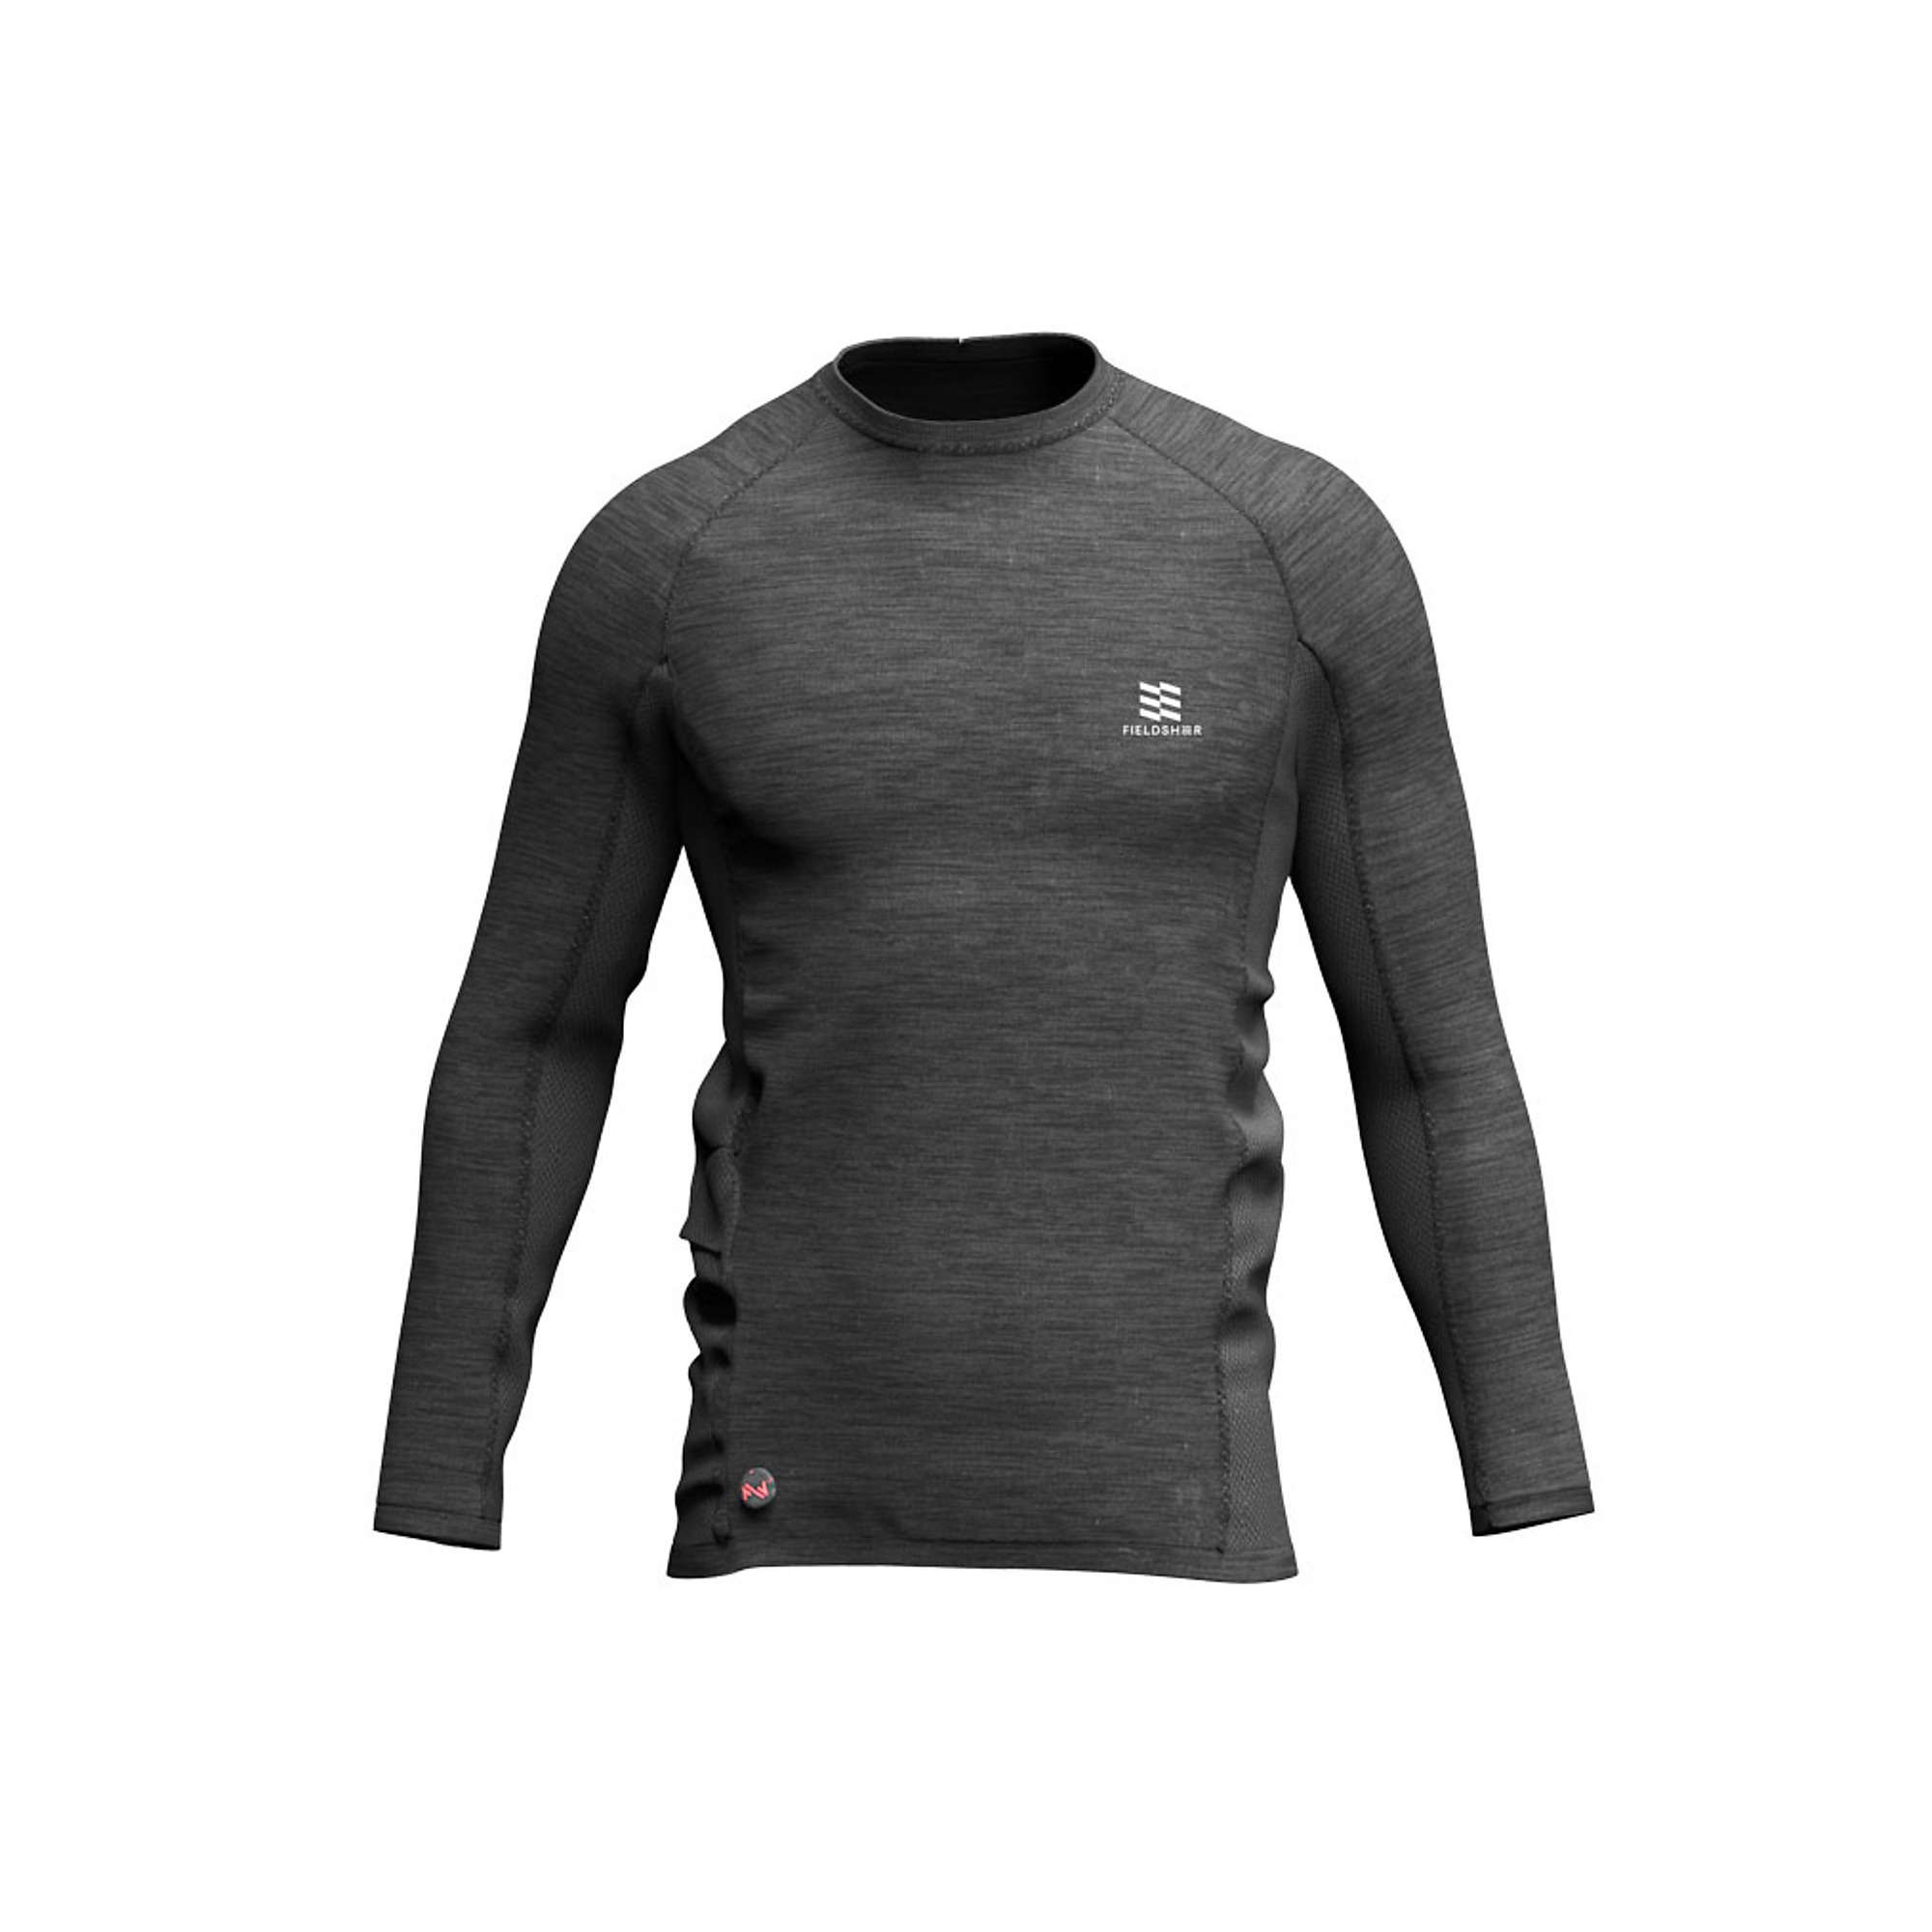 Fieldsheer, Men's Primer Heated Baselayer Shirt, Size 3XL, Color Black, Model MWMT11010720